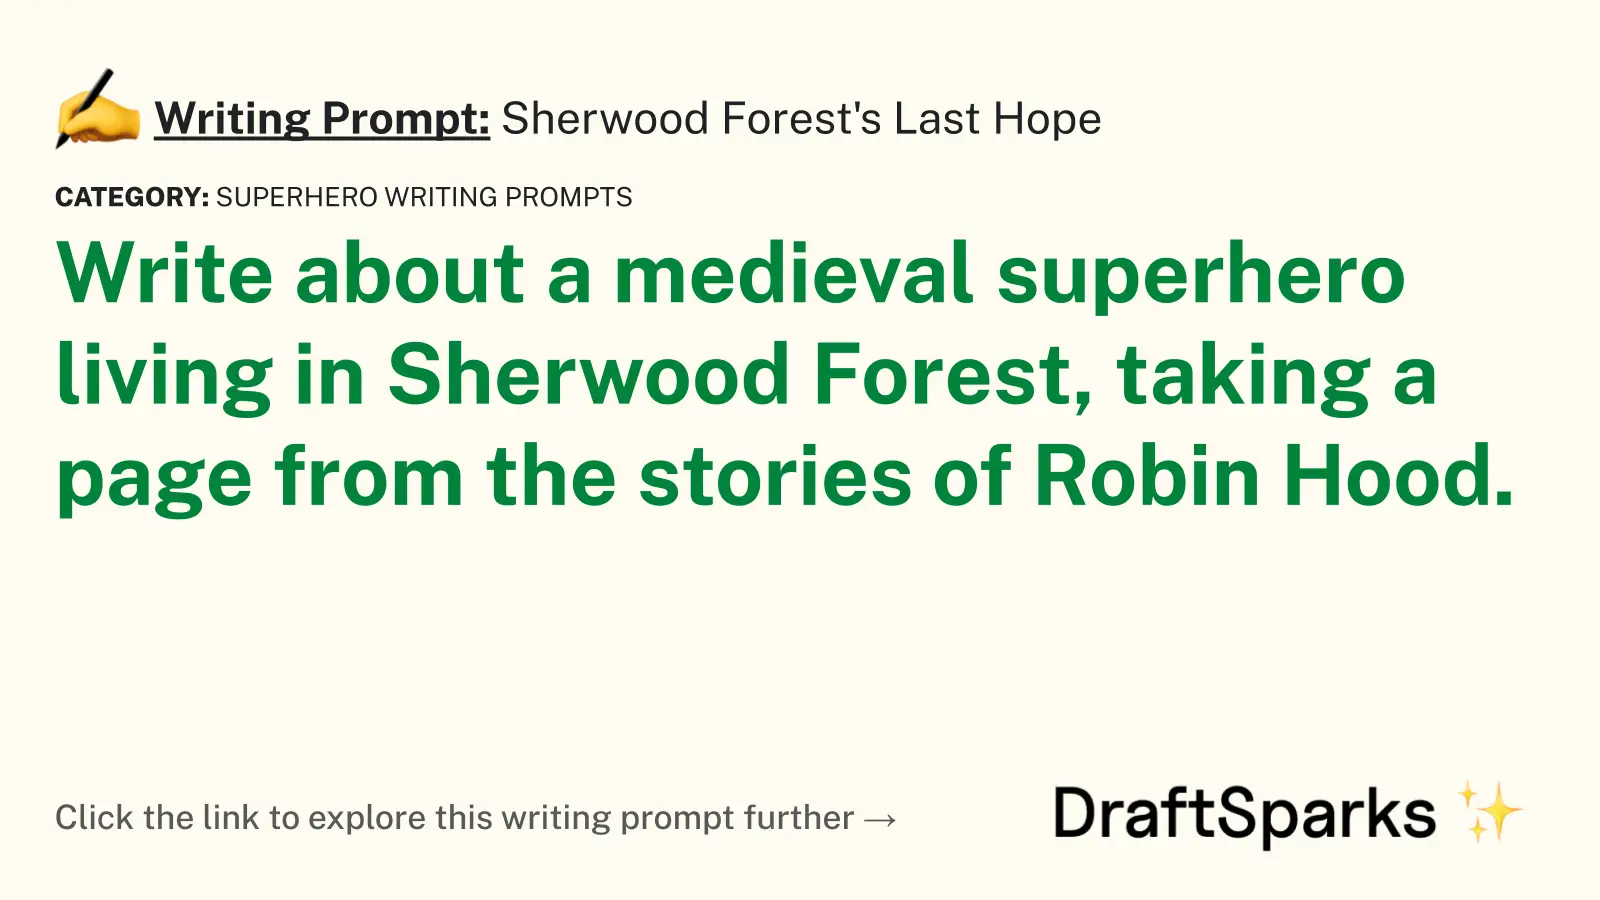 Sherwood Forest’s Last Hope